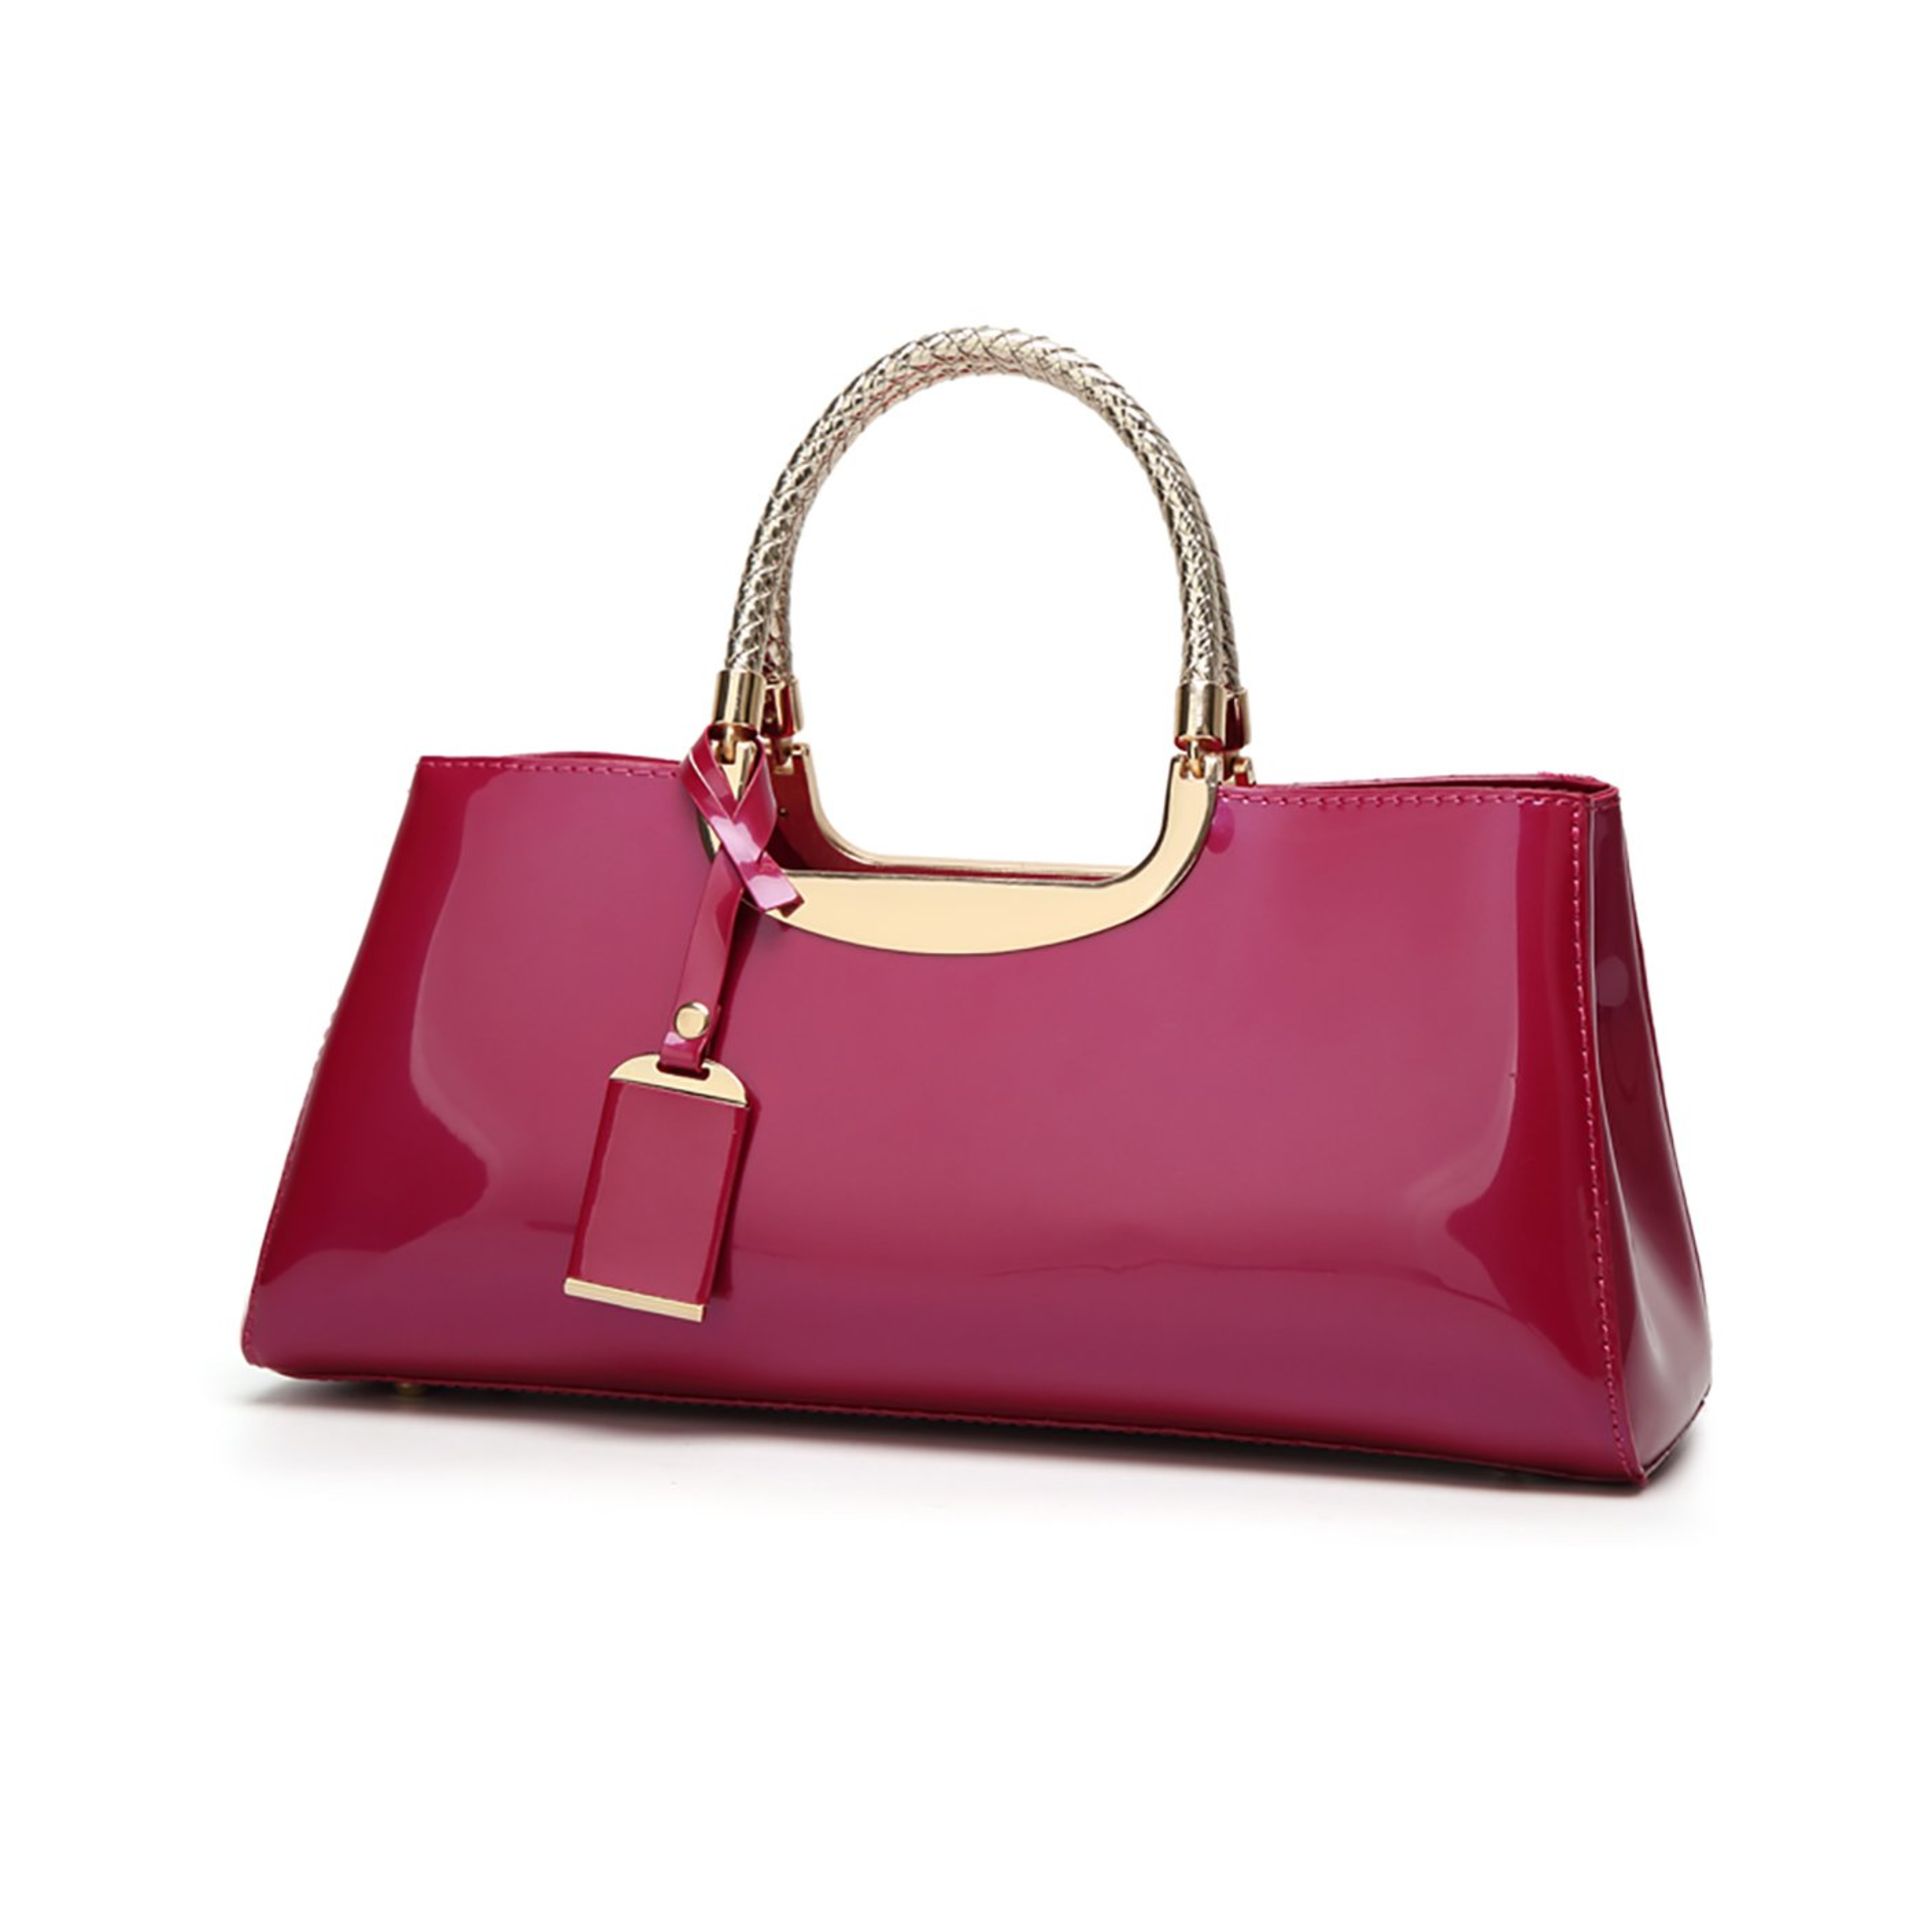 Brand New Women's Coolives Light Golden Strap Blood Red Handbag RRP £39.99